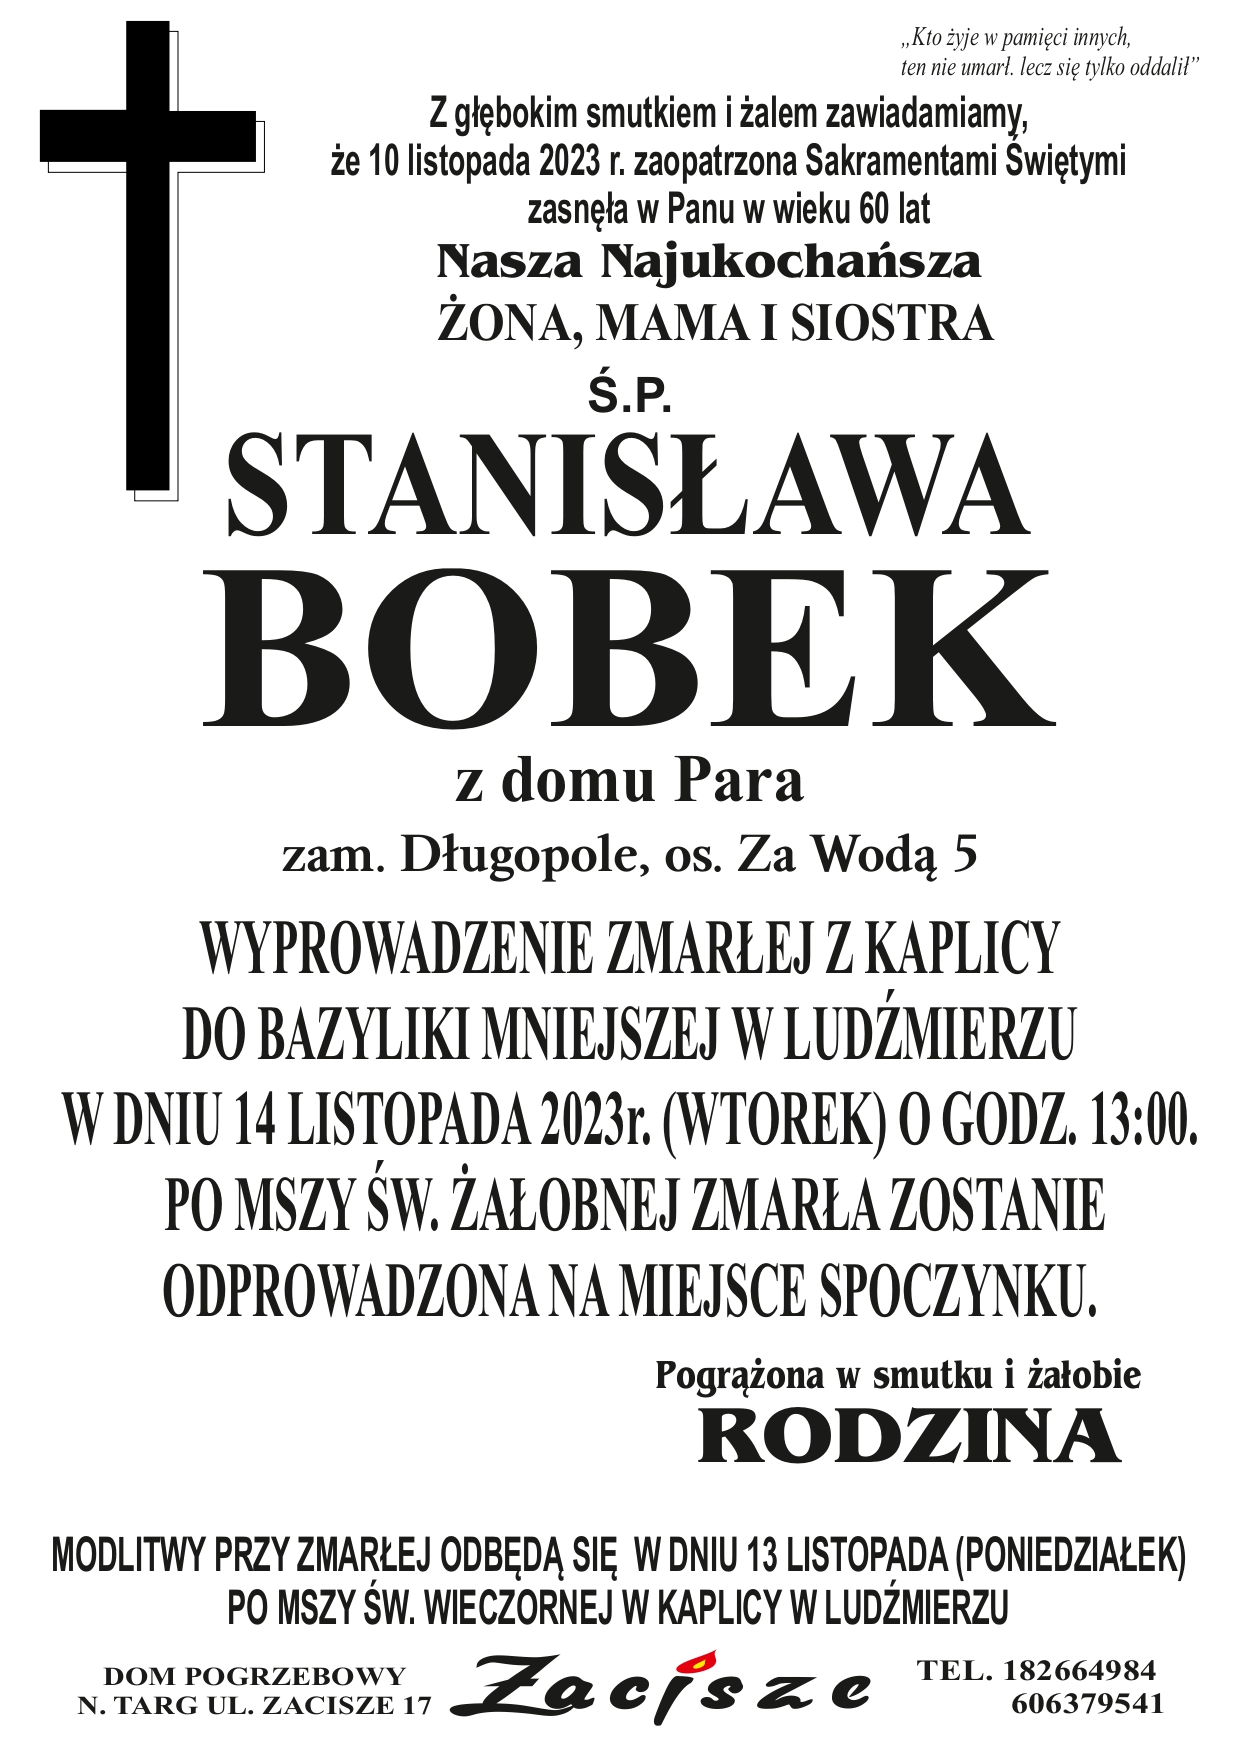 Stanisława Bobek